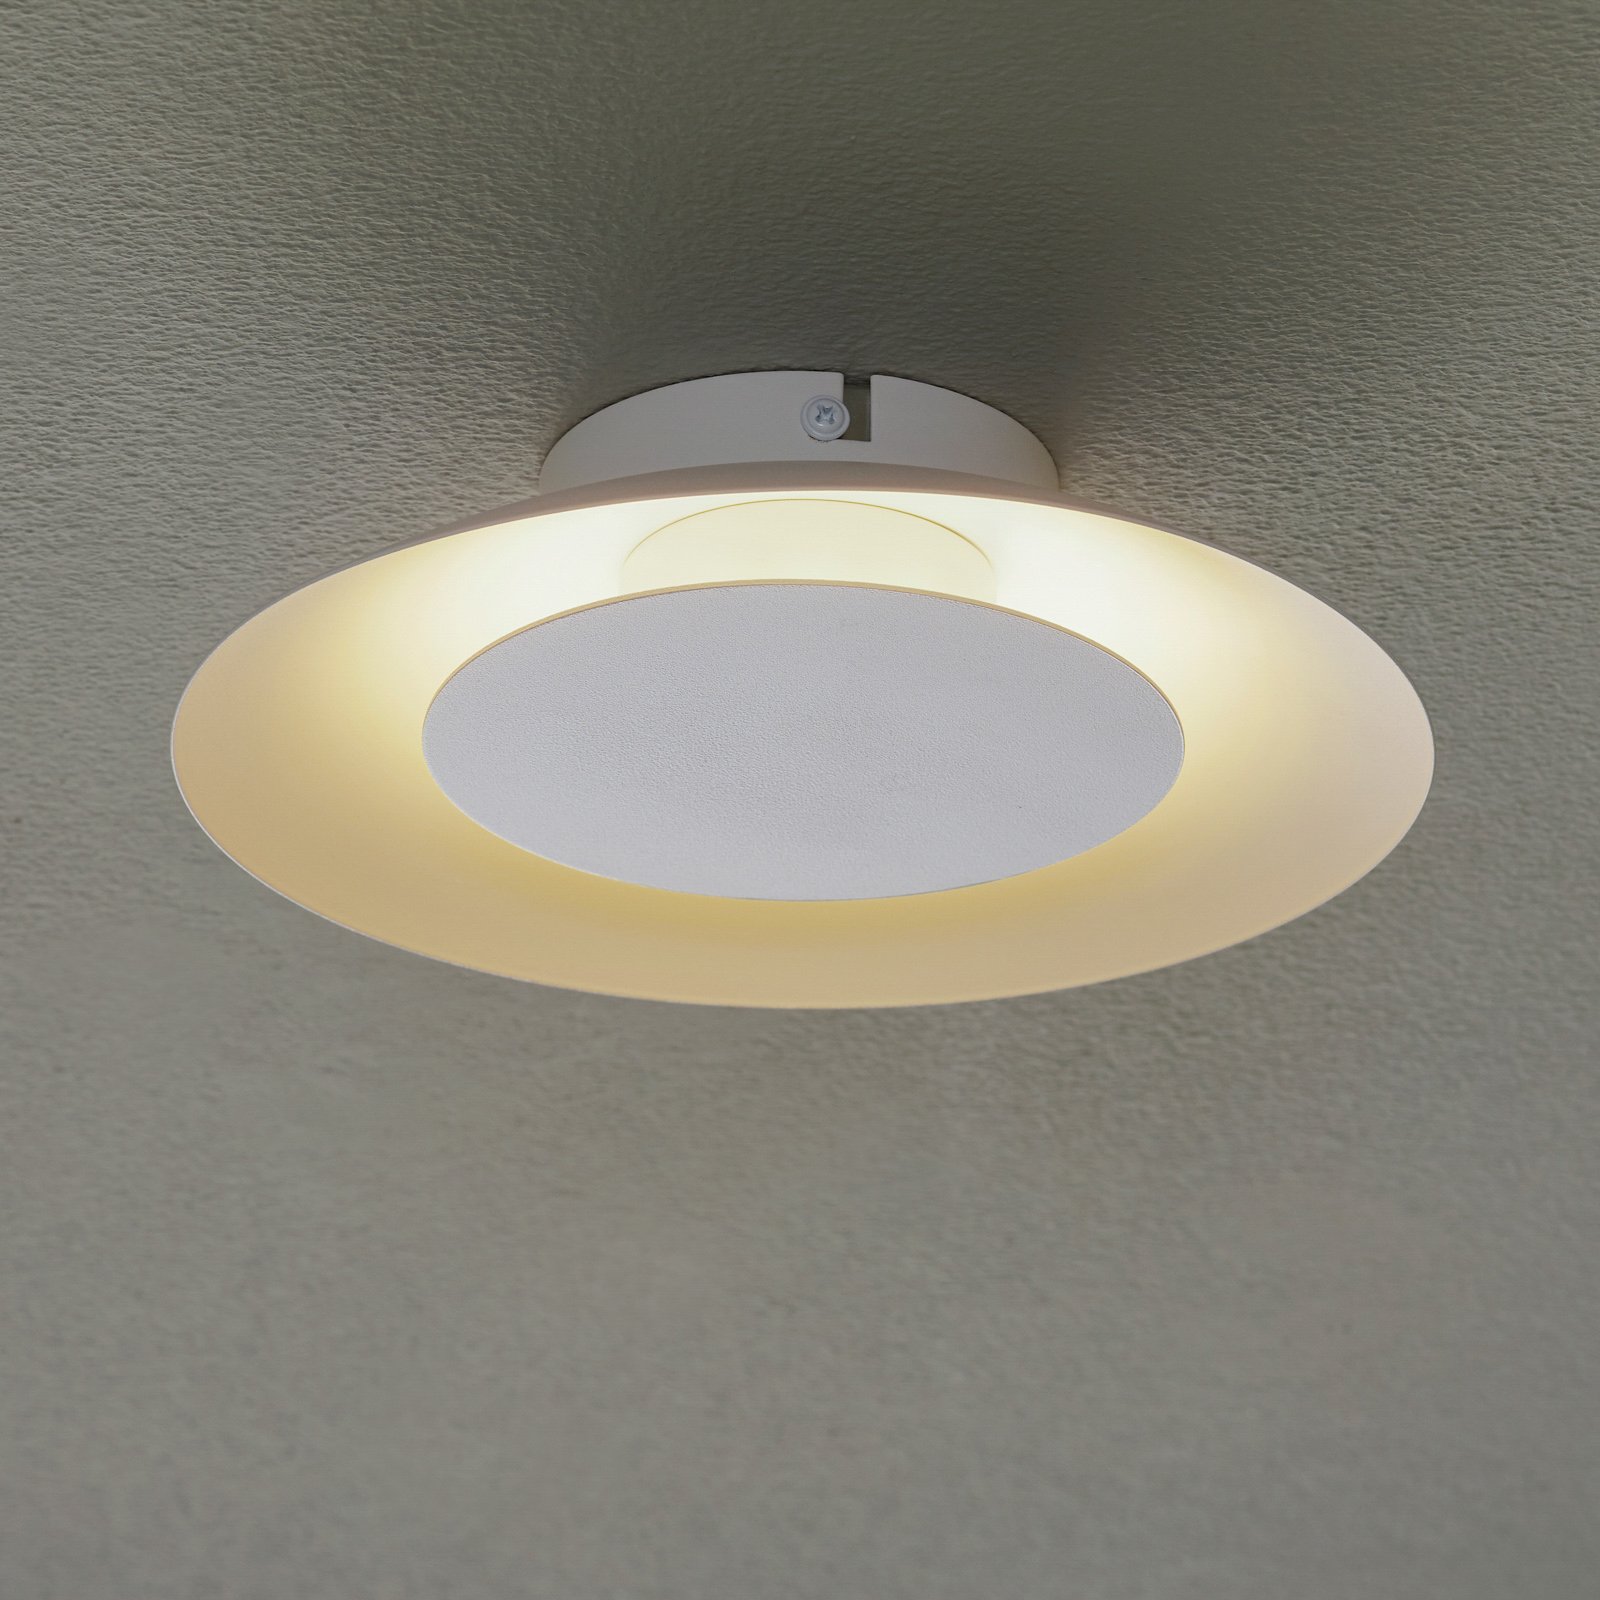 LED plafondlamp Foskal in wit, Ø 21,5 cm